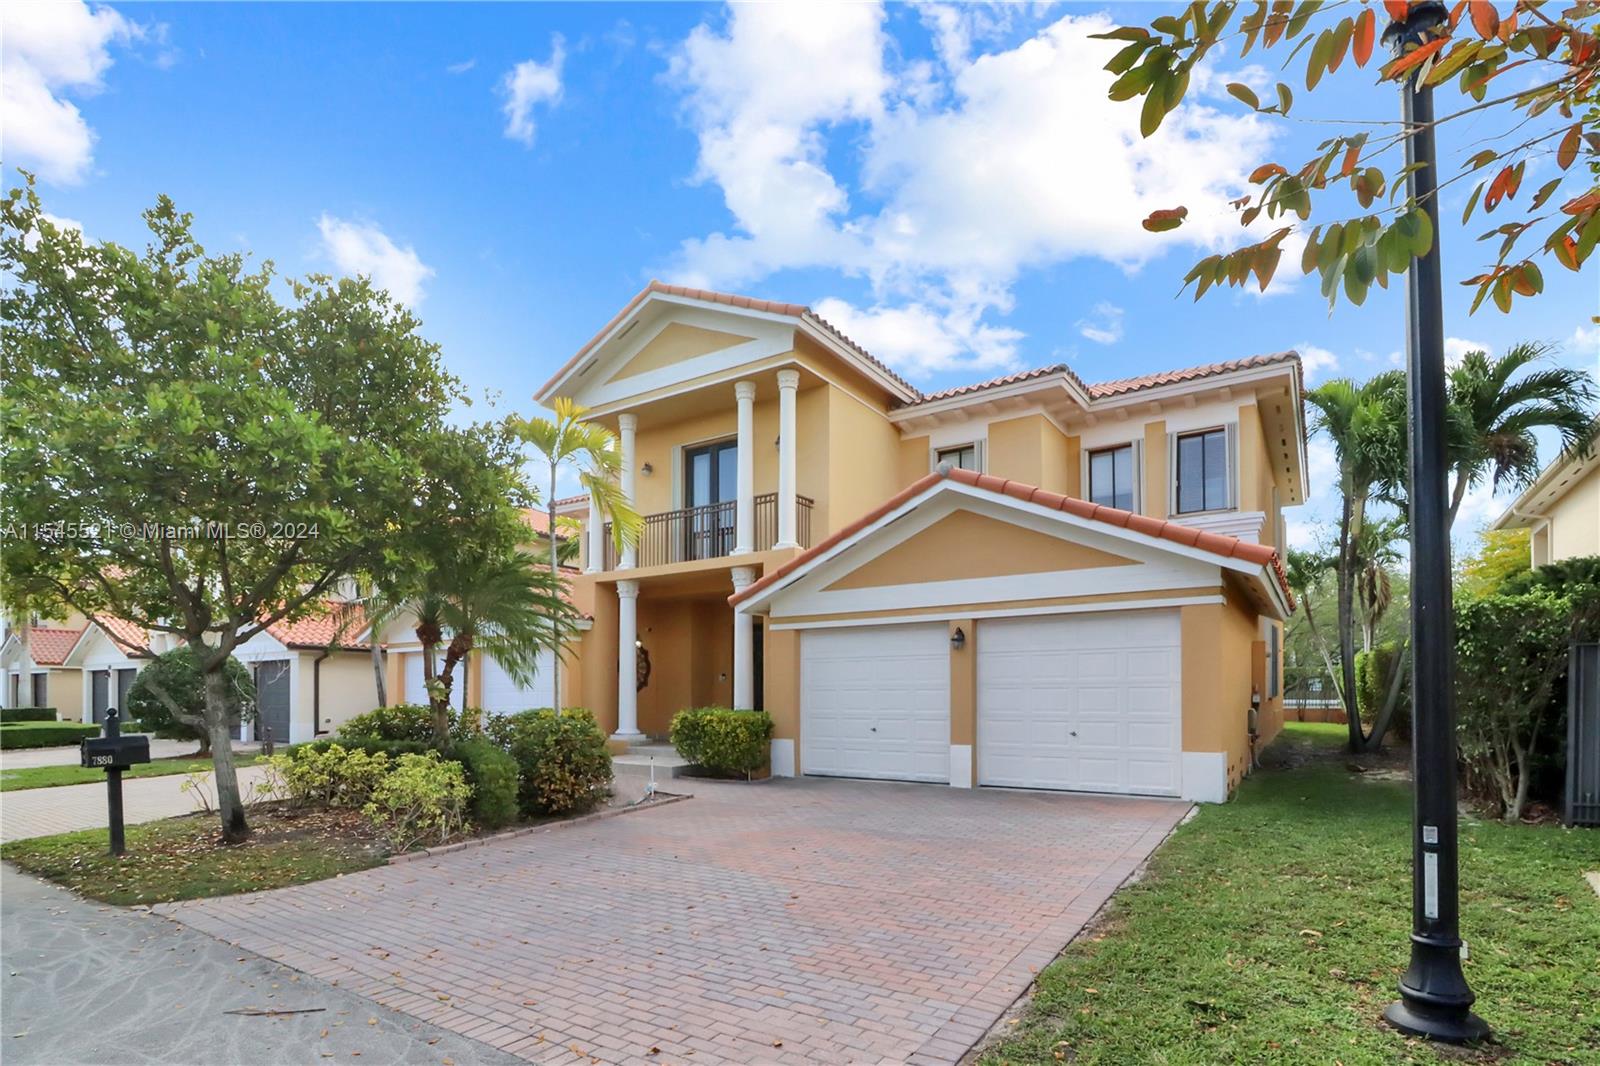 Houses for Sale in Cutler Bay, Florida - Cutler Bay Real Estate